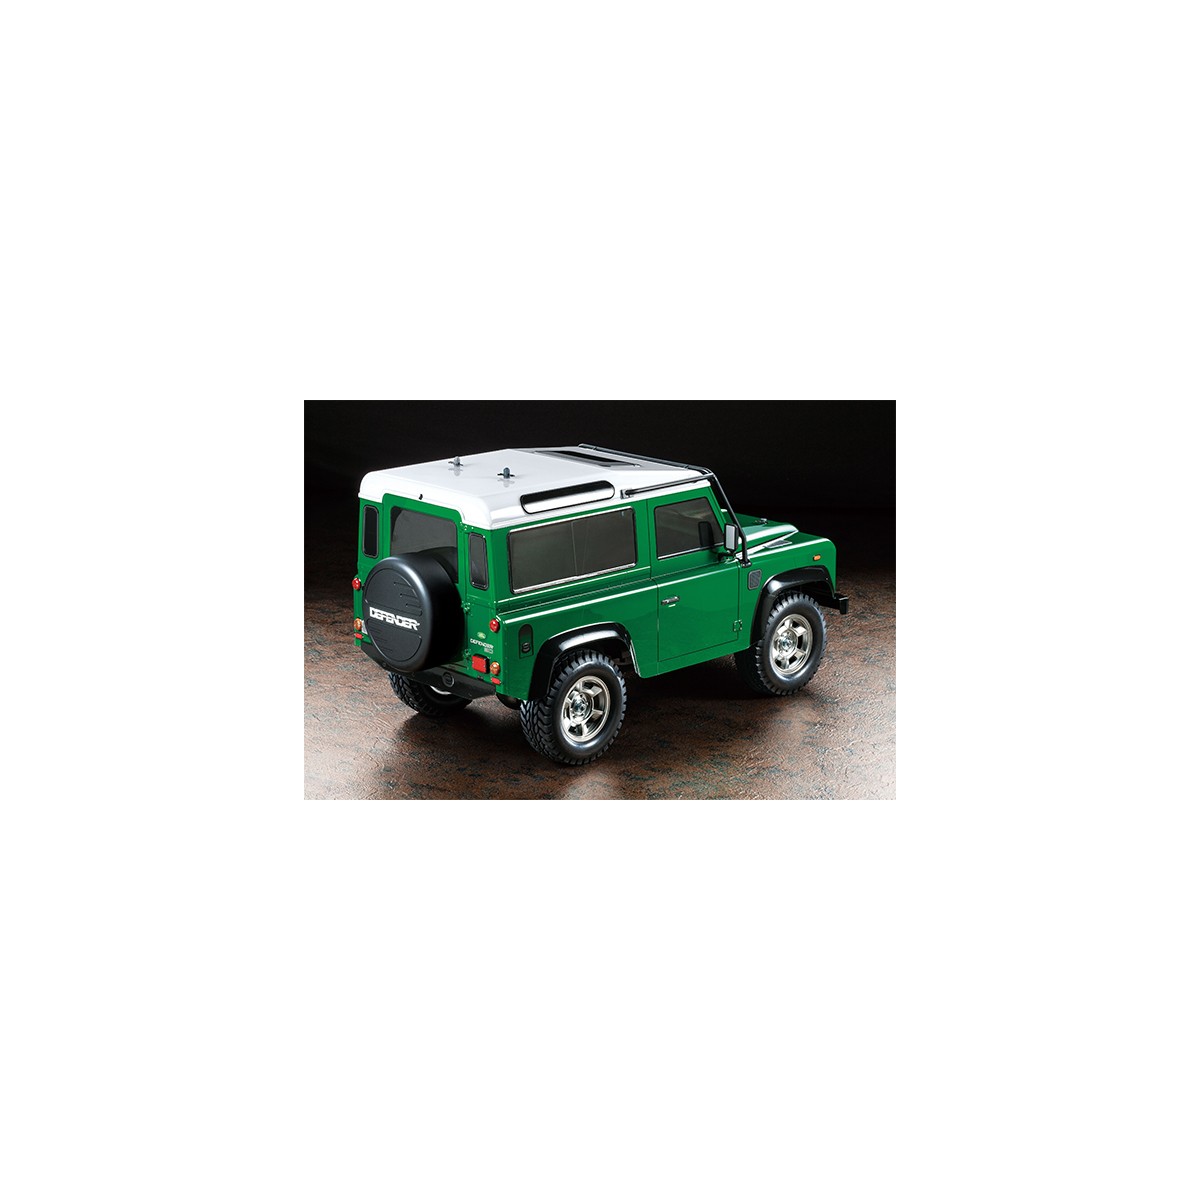 Tamiya 1/10 Land Rover Defender 90 CC-01 Chassis Truck Kit 58657 